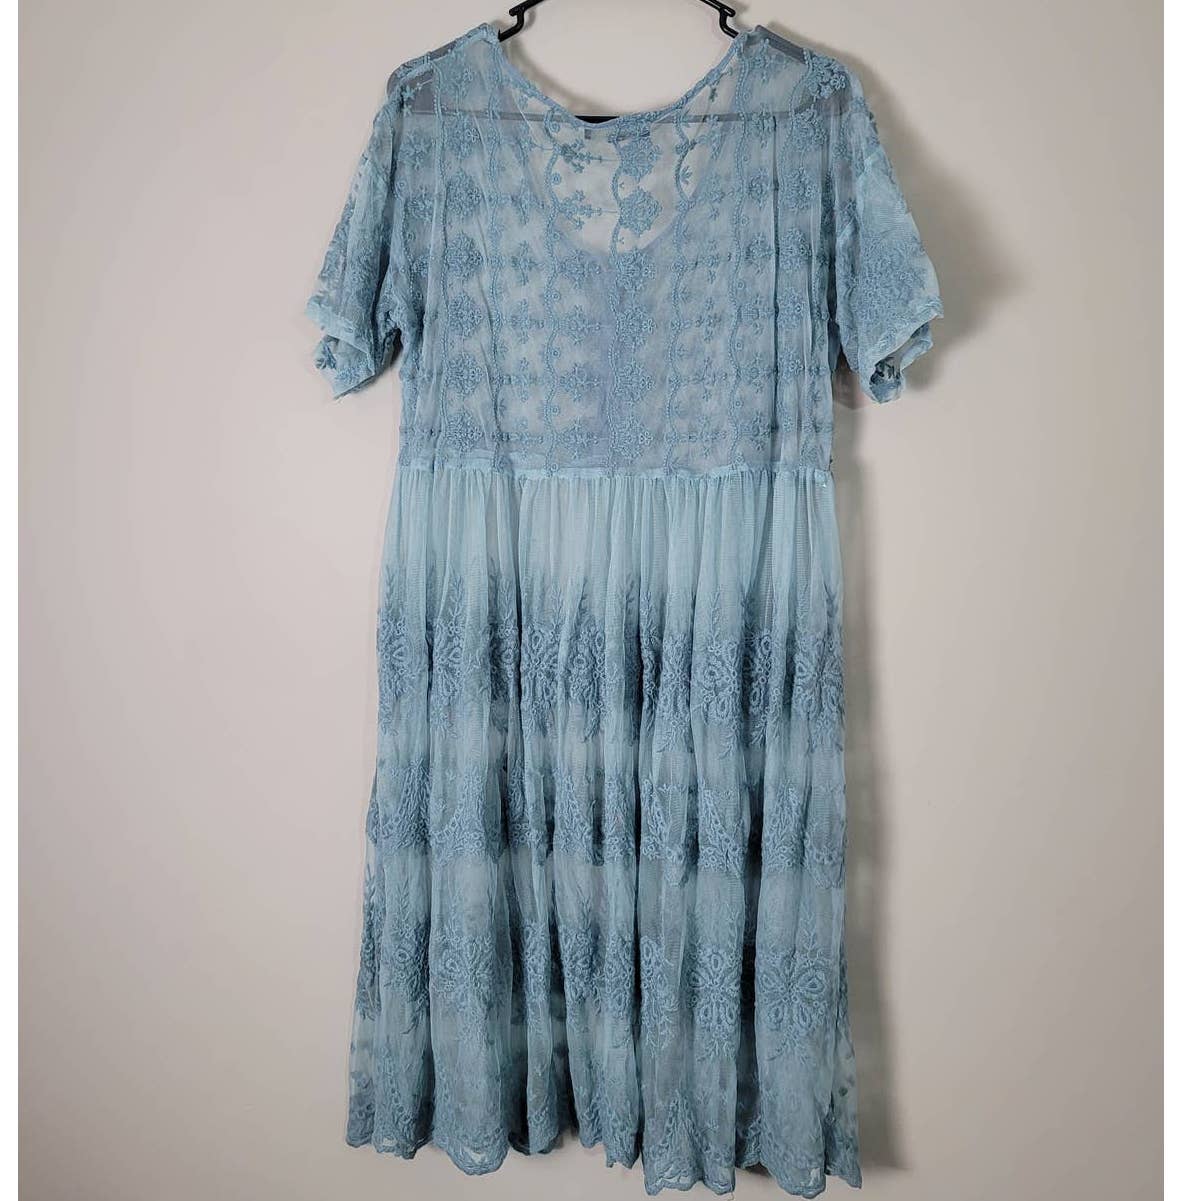 Suzanne Betro Lace Dress Light Blue Sheer Button Front Plus Size 1X